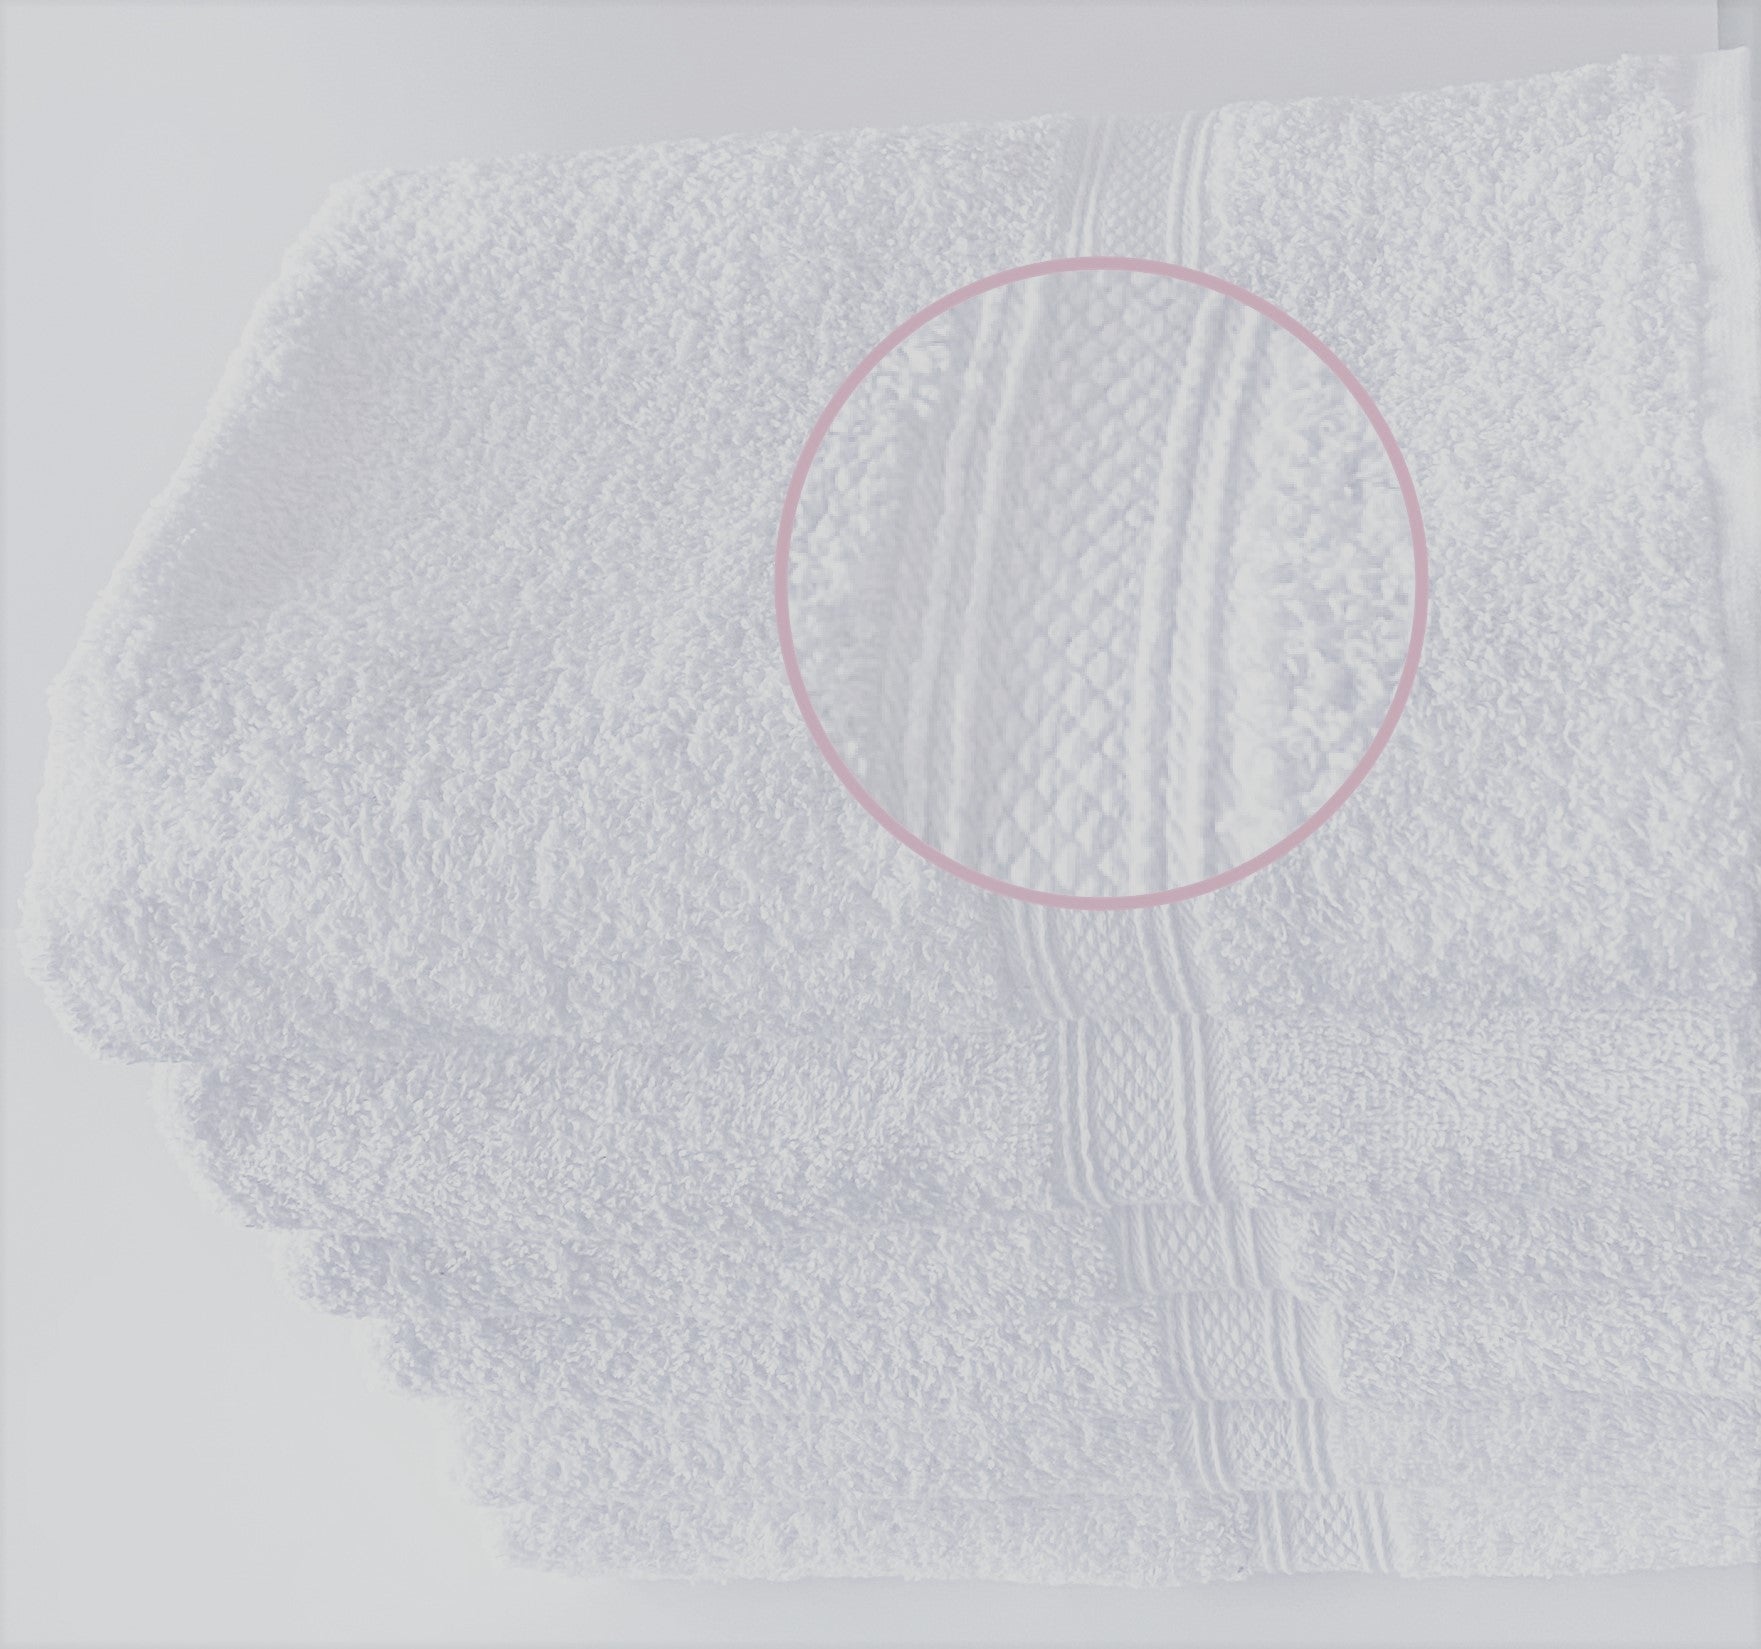 16x27 Microfiber Premium Hand Towel